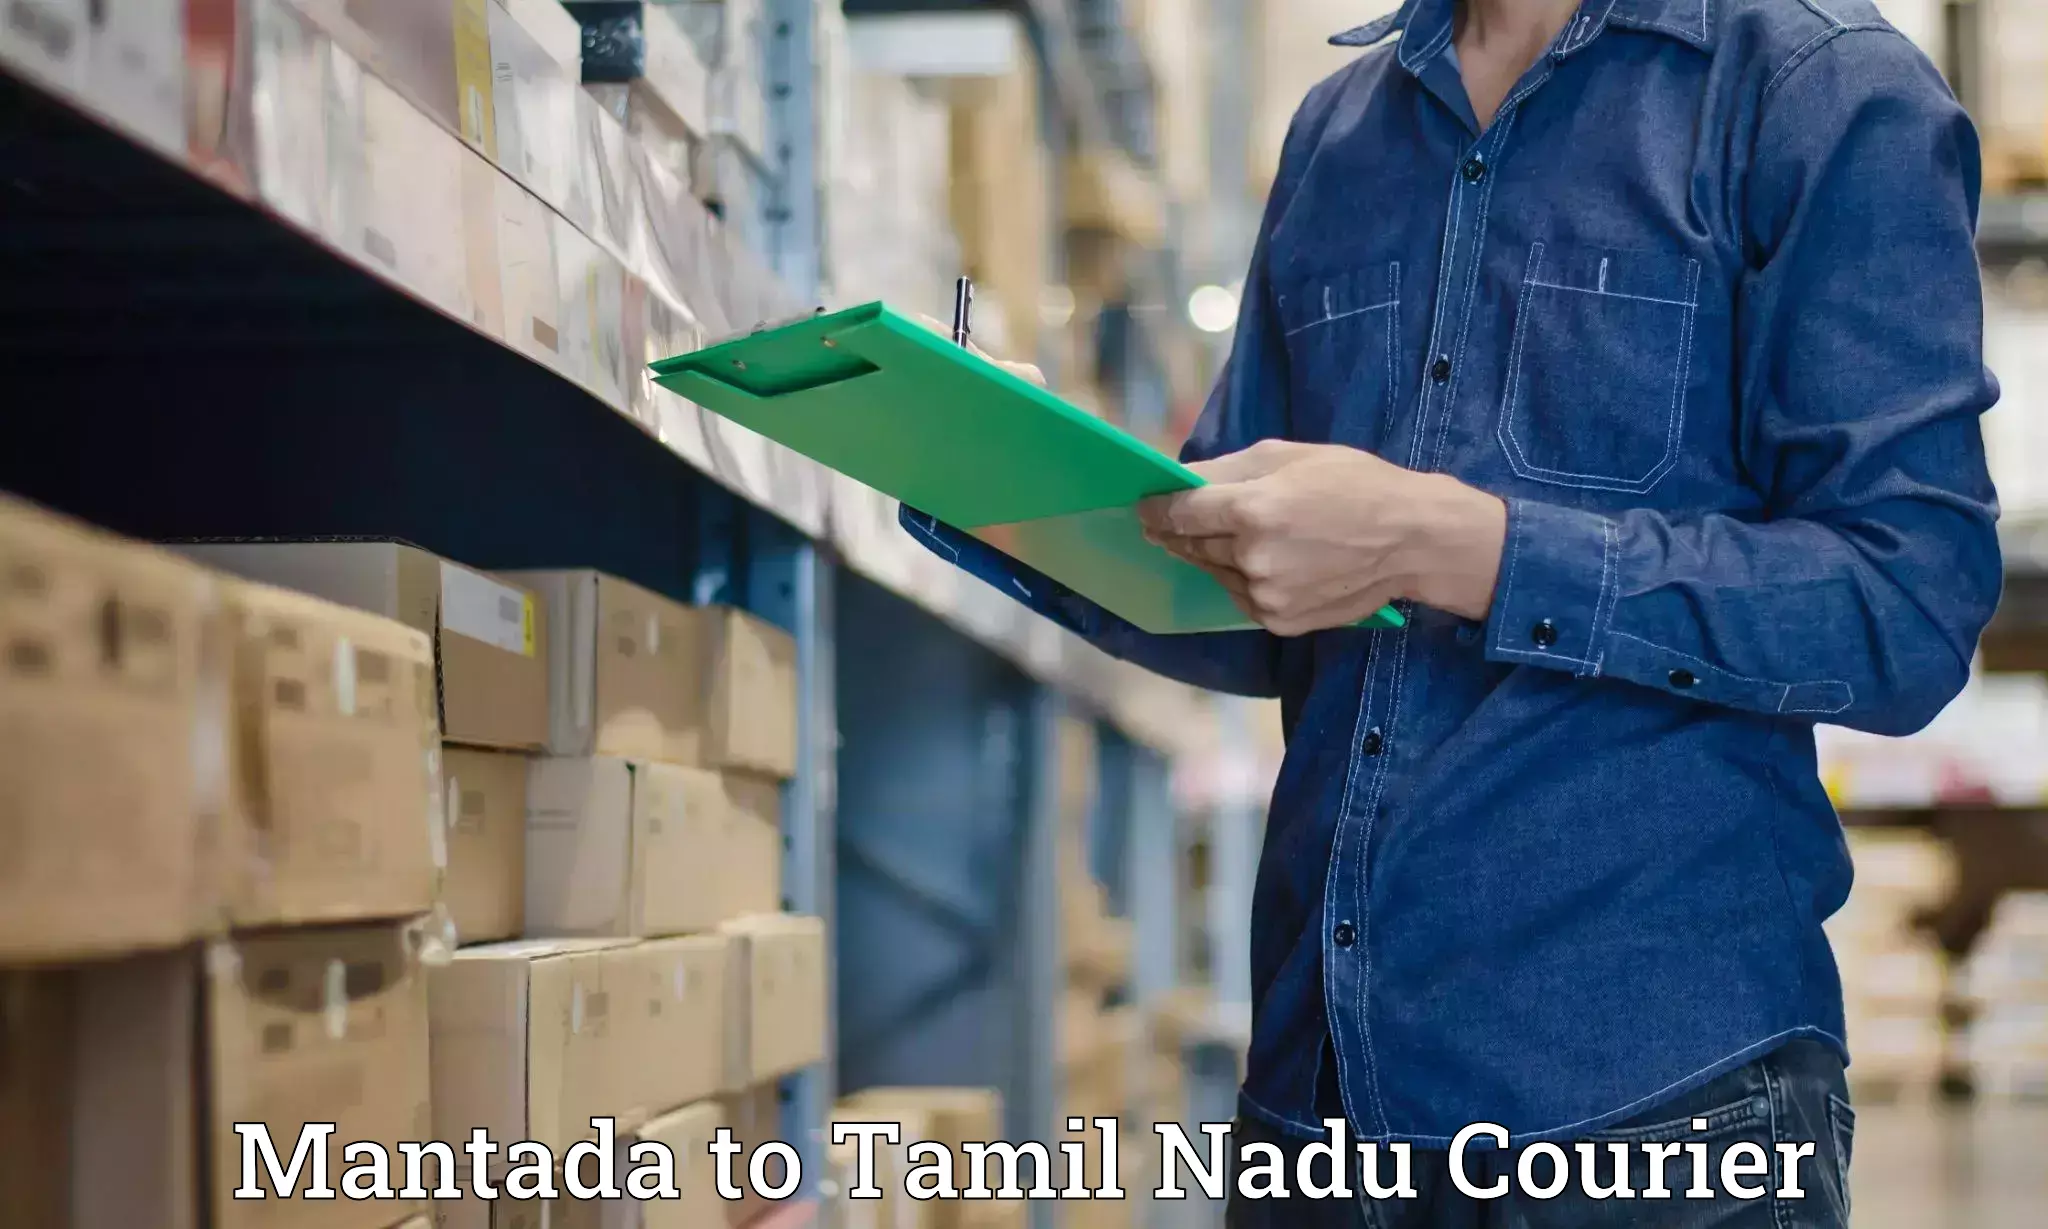 Express courier capabilities Mantada to Tamil Nadu